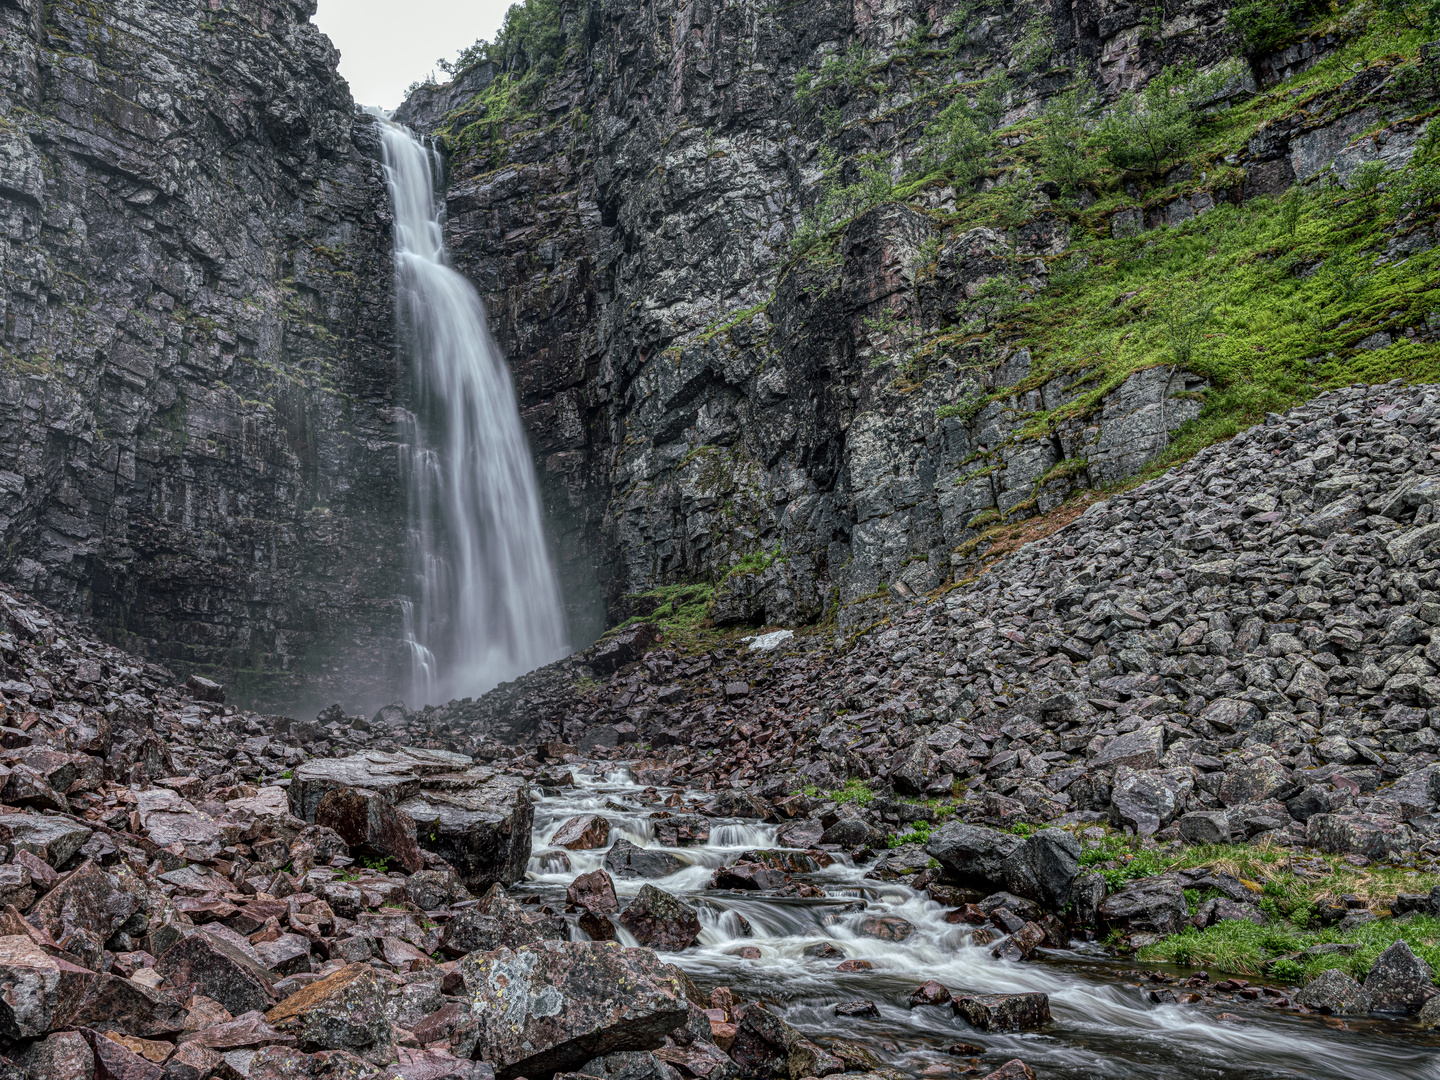 02 Wasserfall Njupeskär